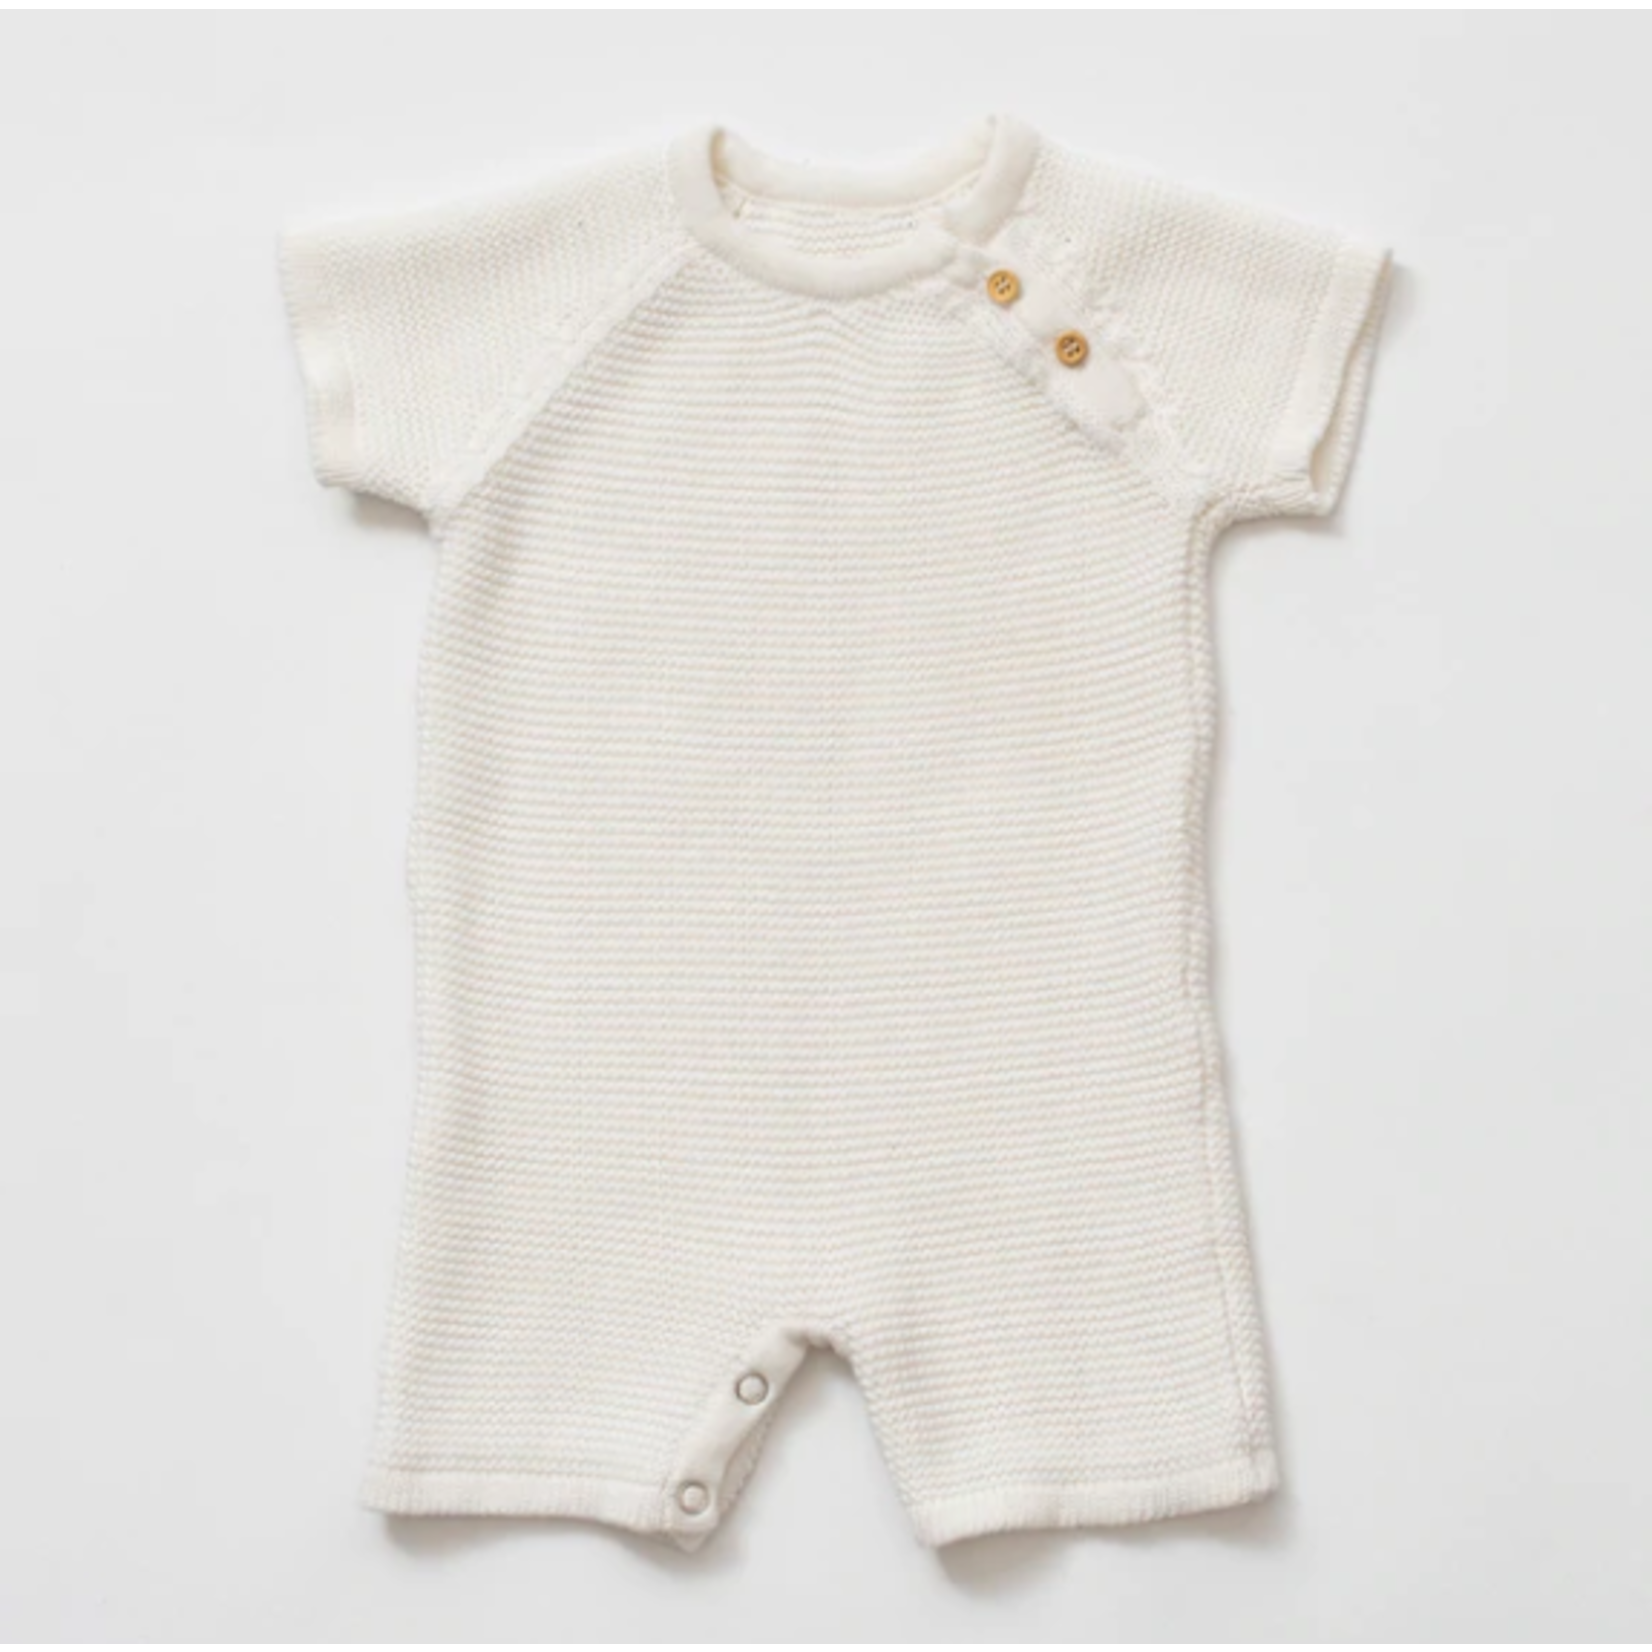 Zestt Organics Knit Baby Romper White 6-12M